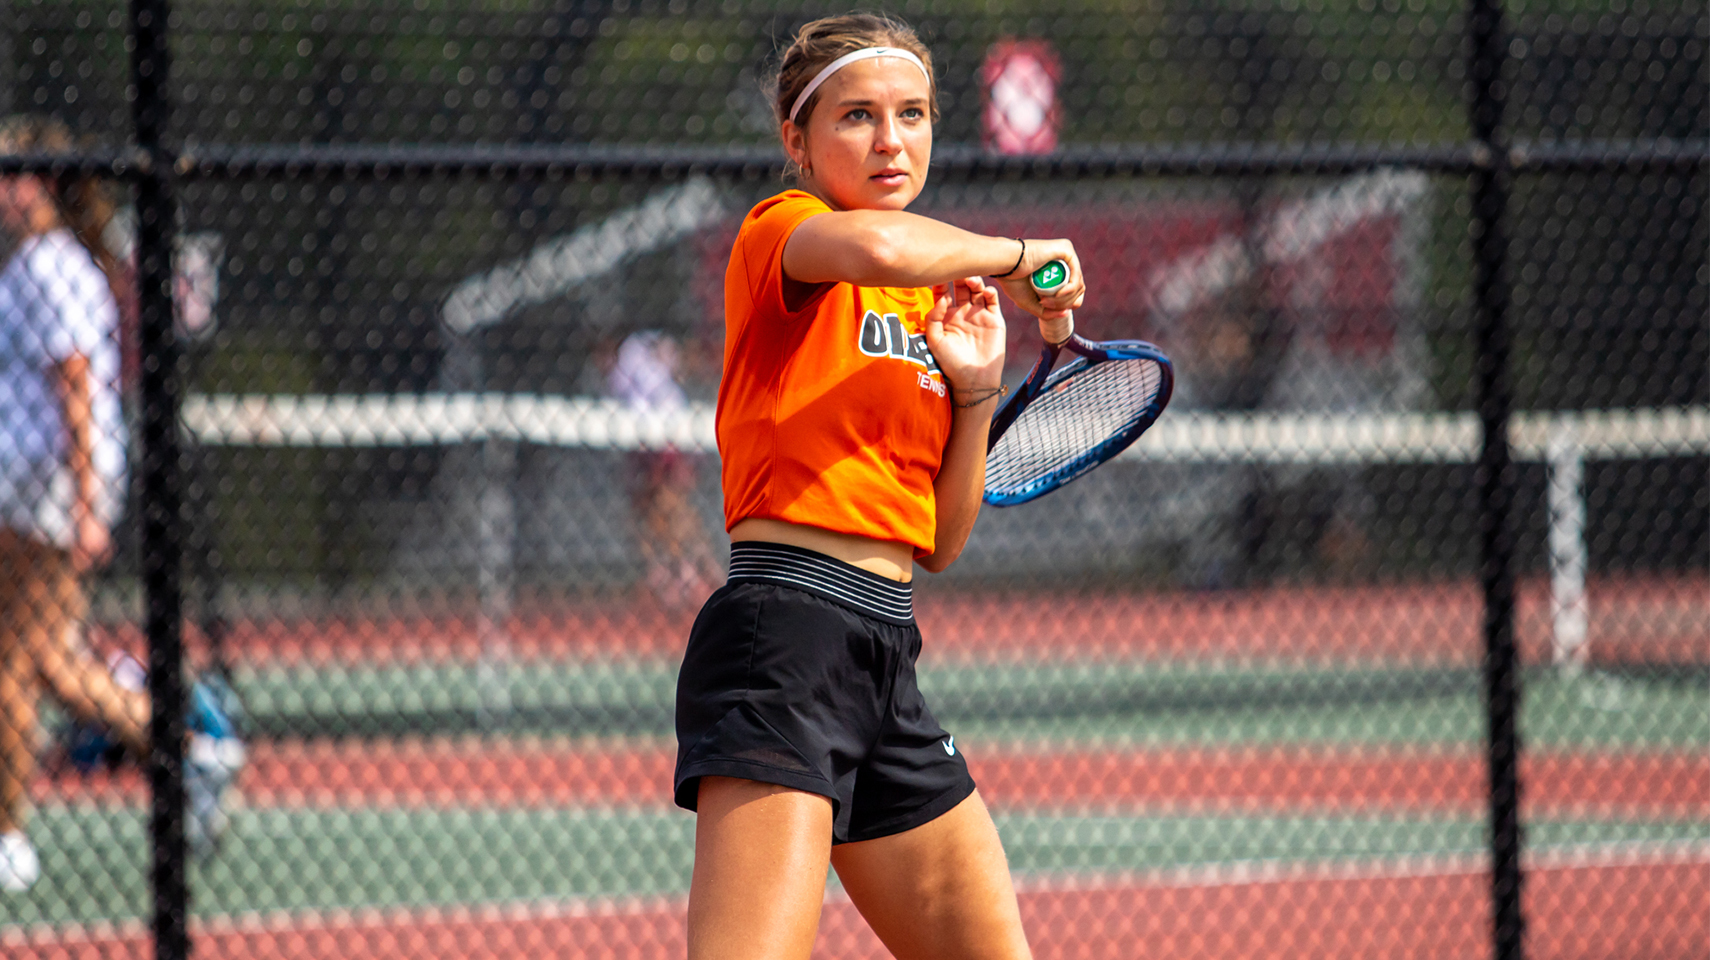 Women's tennis player in orange hitting the ball